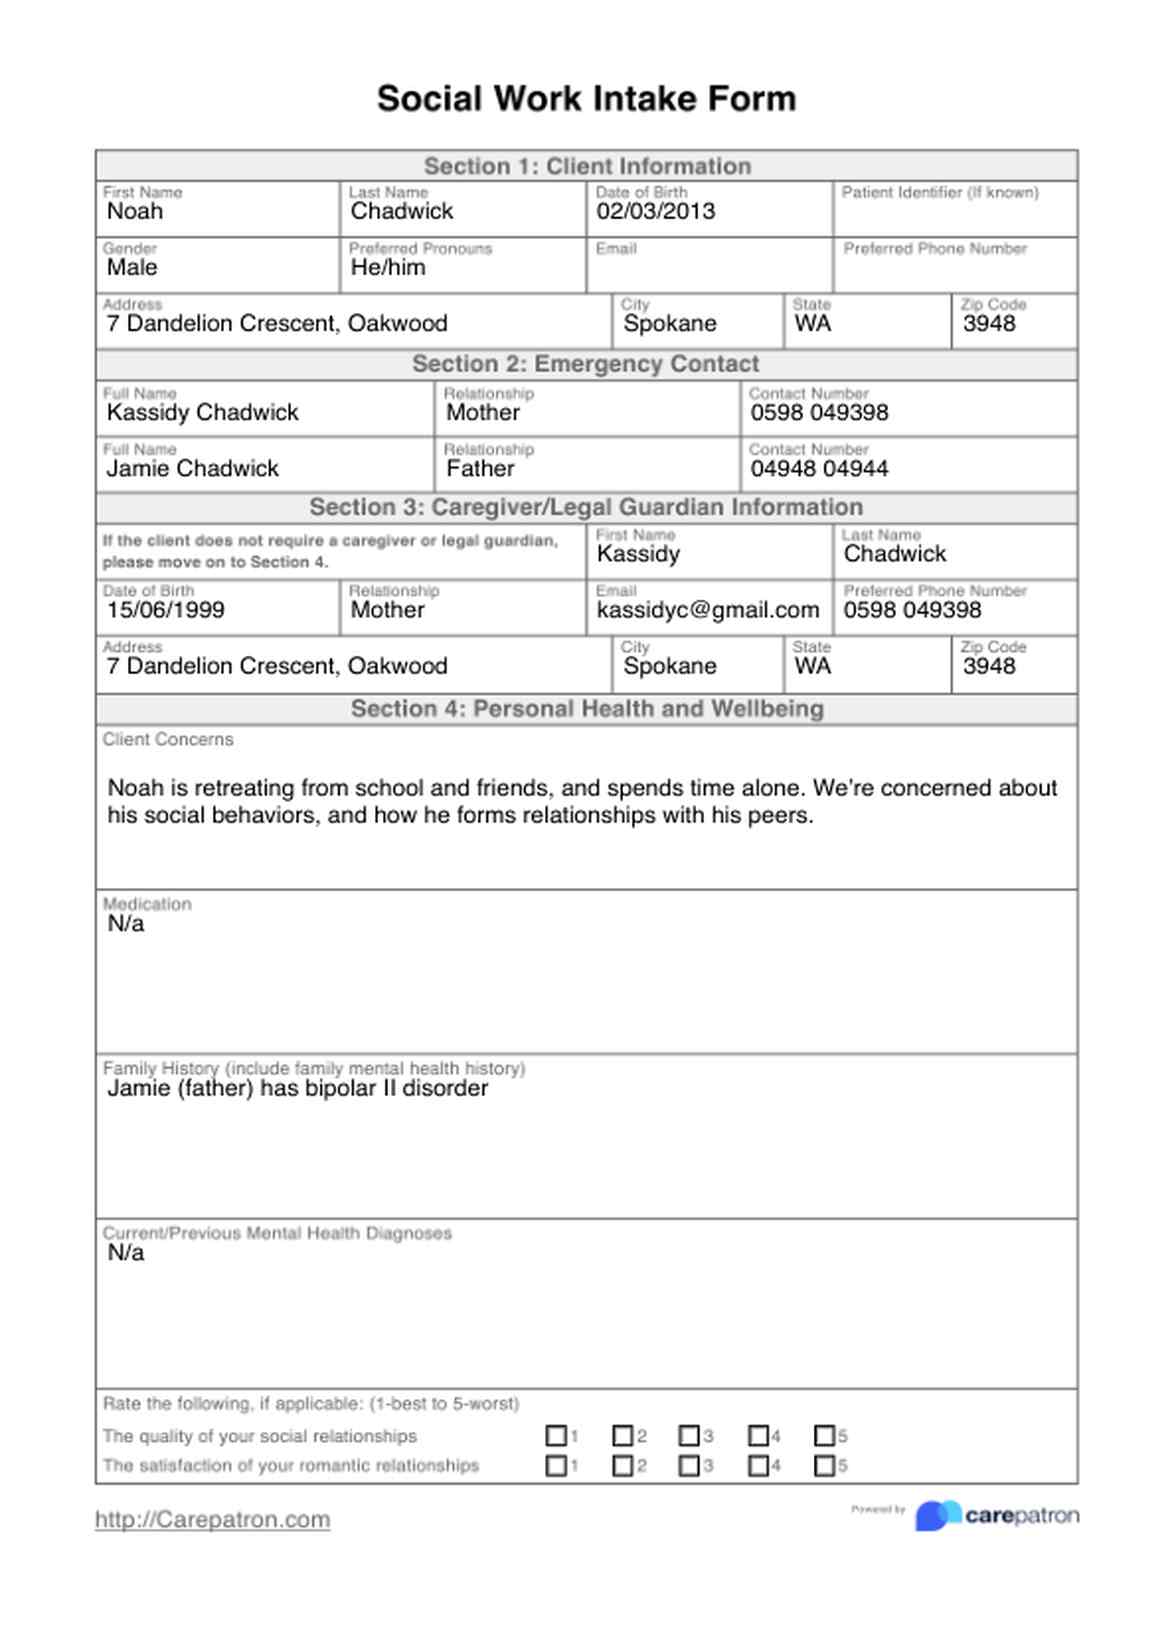 Social Work Intake Form PDF Example